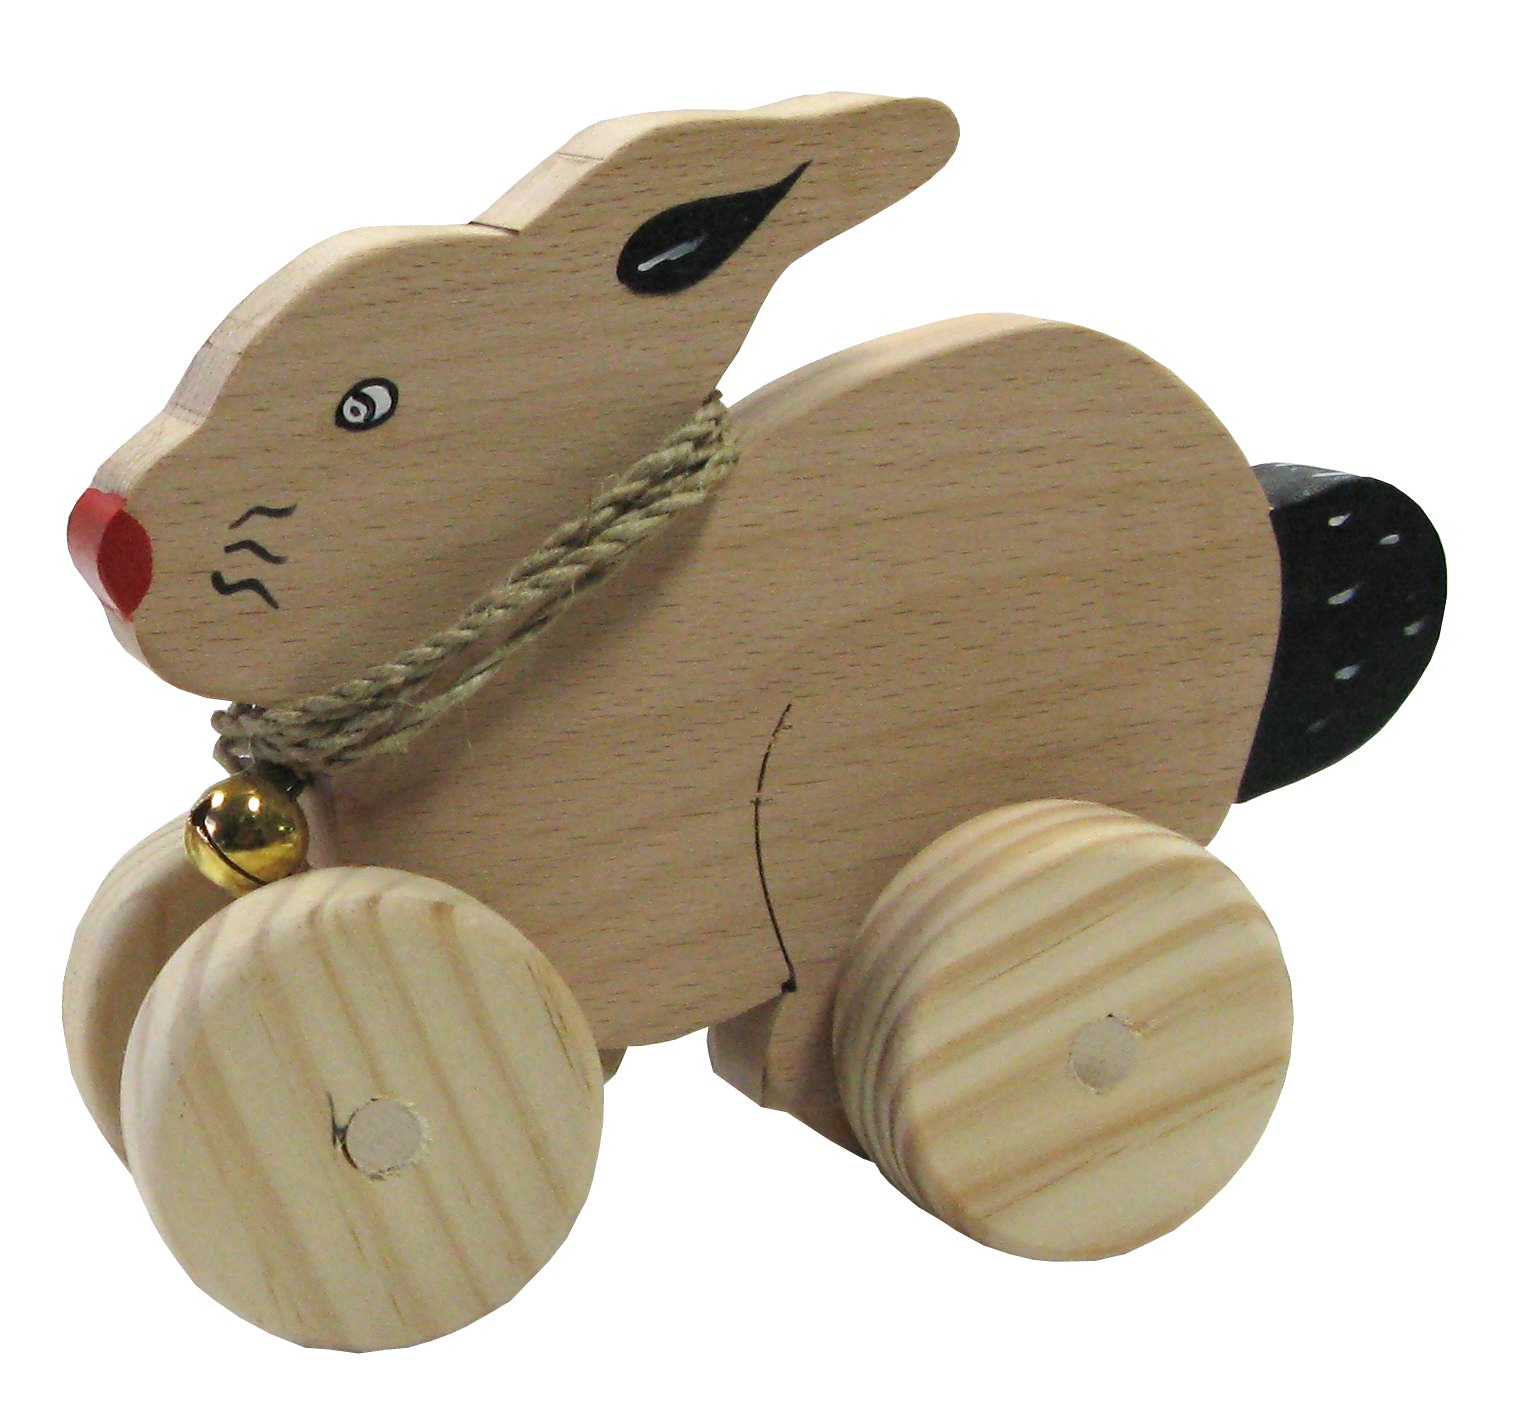 jouet en bois pour lapin